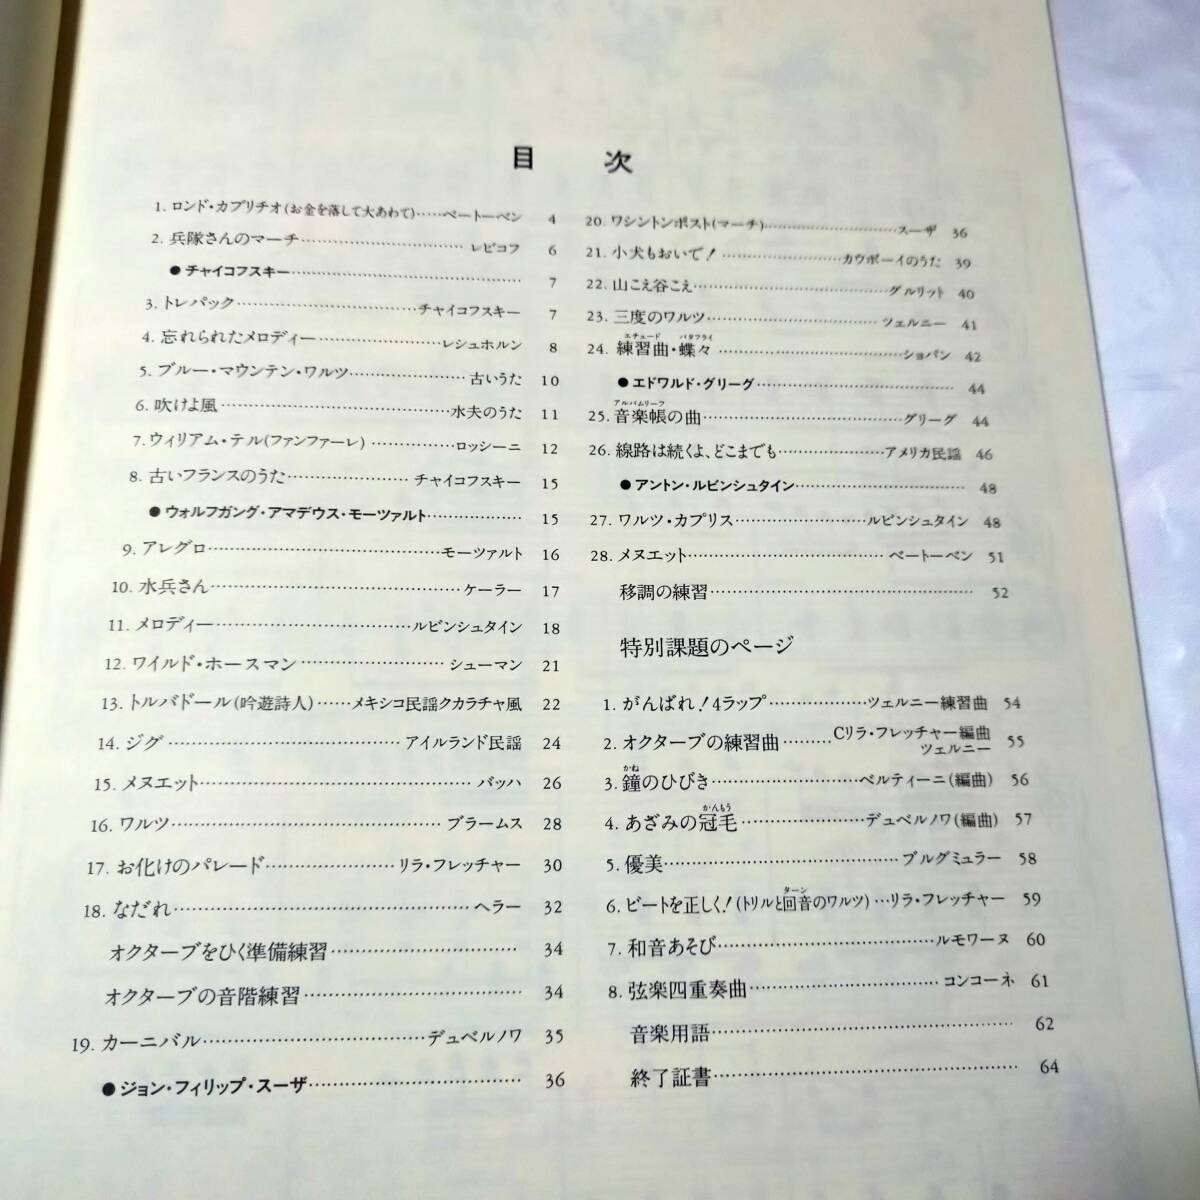 !li rough re tea - piano course book 5 all music . publish company Nakamura ..: explanation translation 